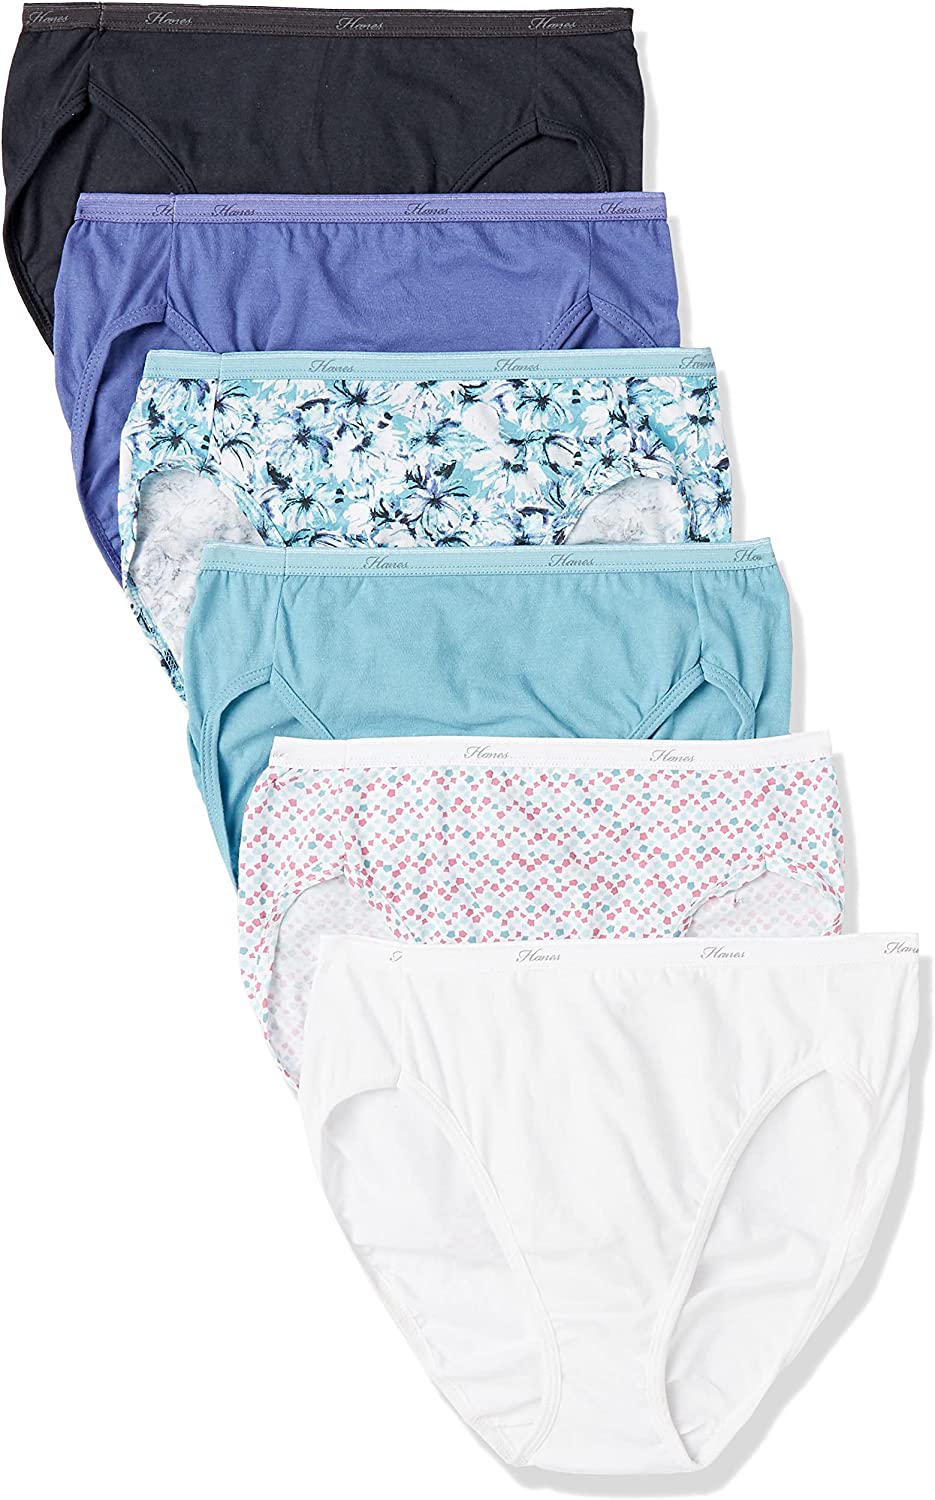 Hanes Women's Cotton Hi-Cut Panties, 6-Pack